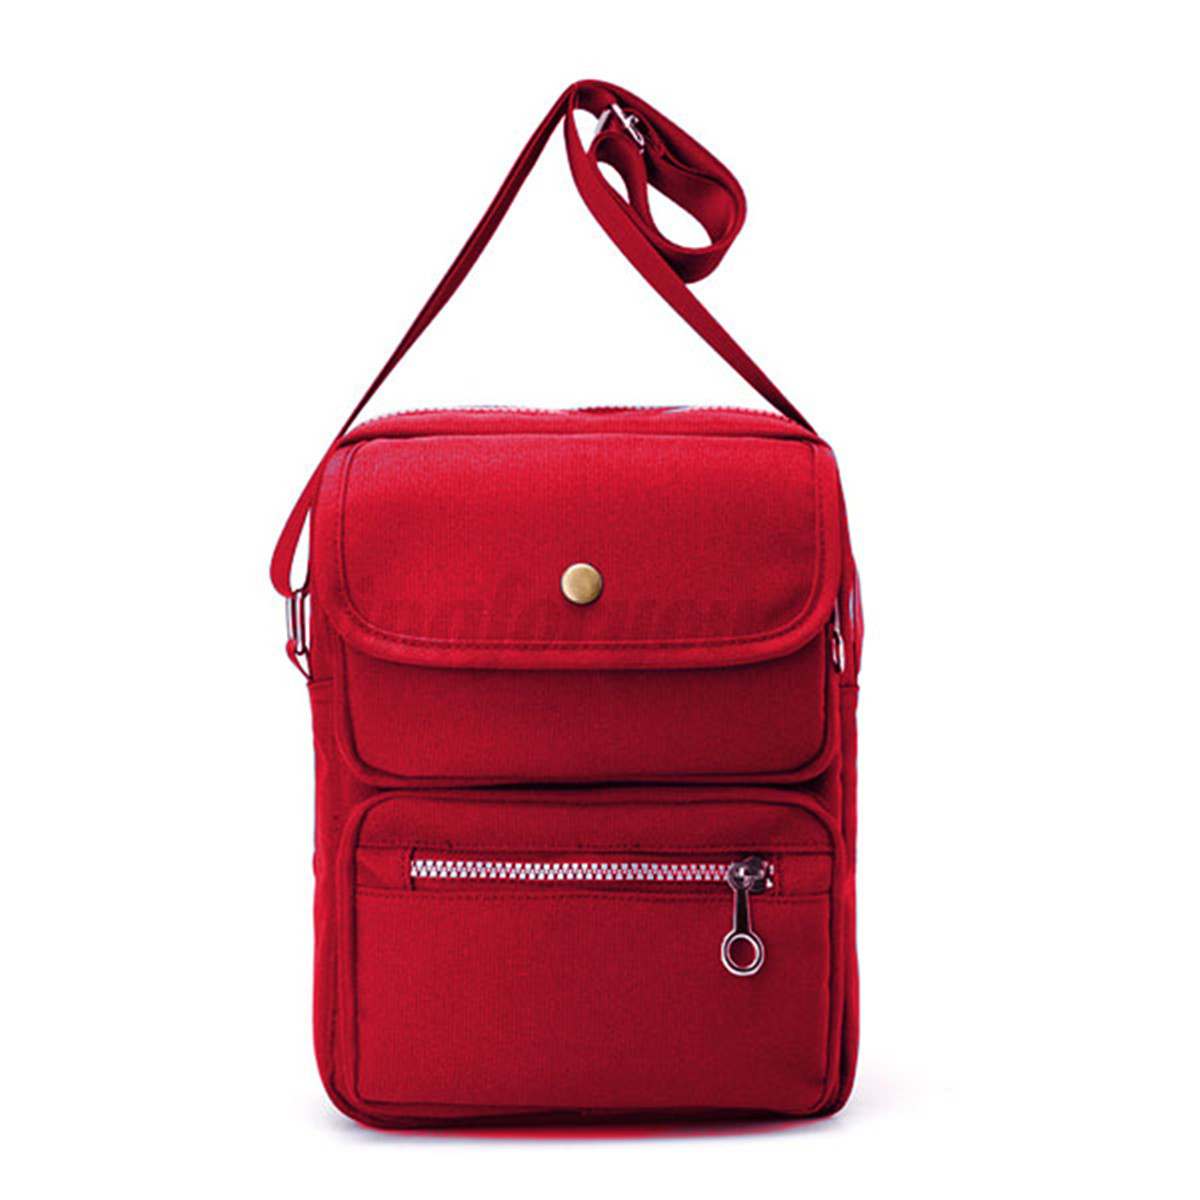 Women Nylon Travel Crossbody Shoulder Bag Travel Passport Purse Tote Handbag Hot | eBay